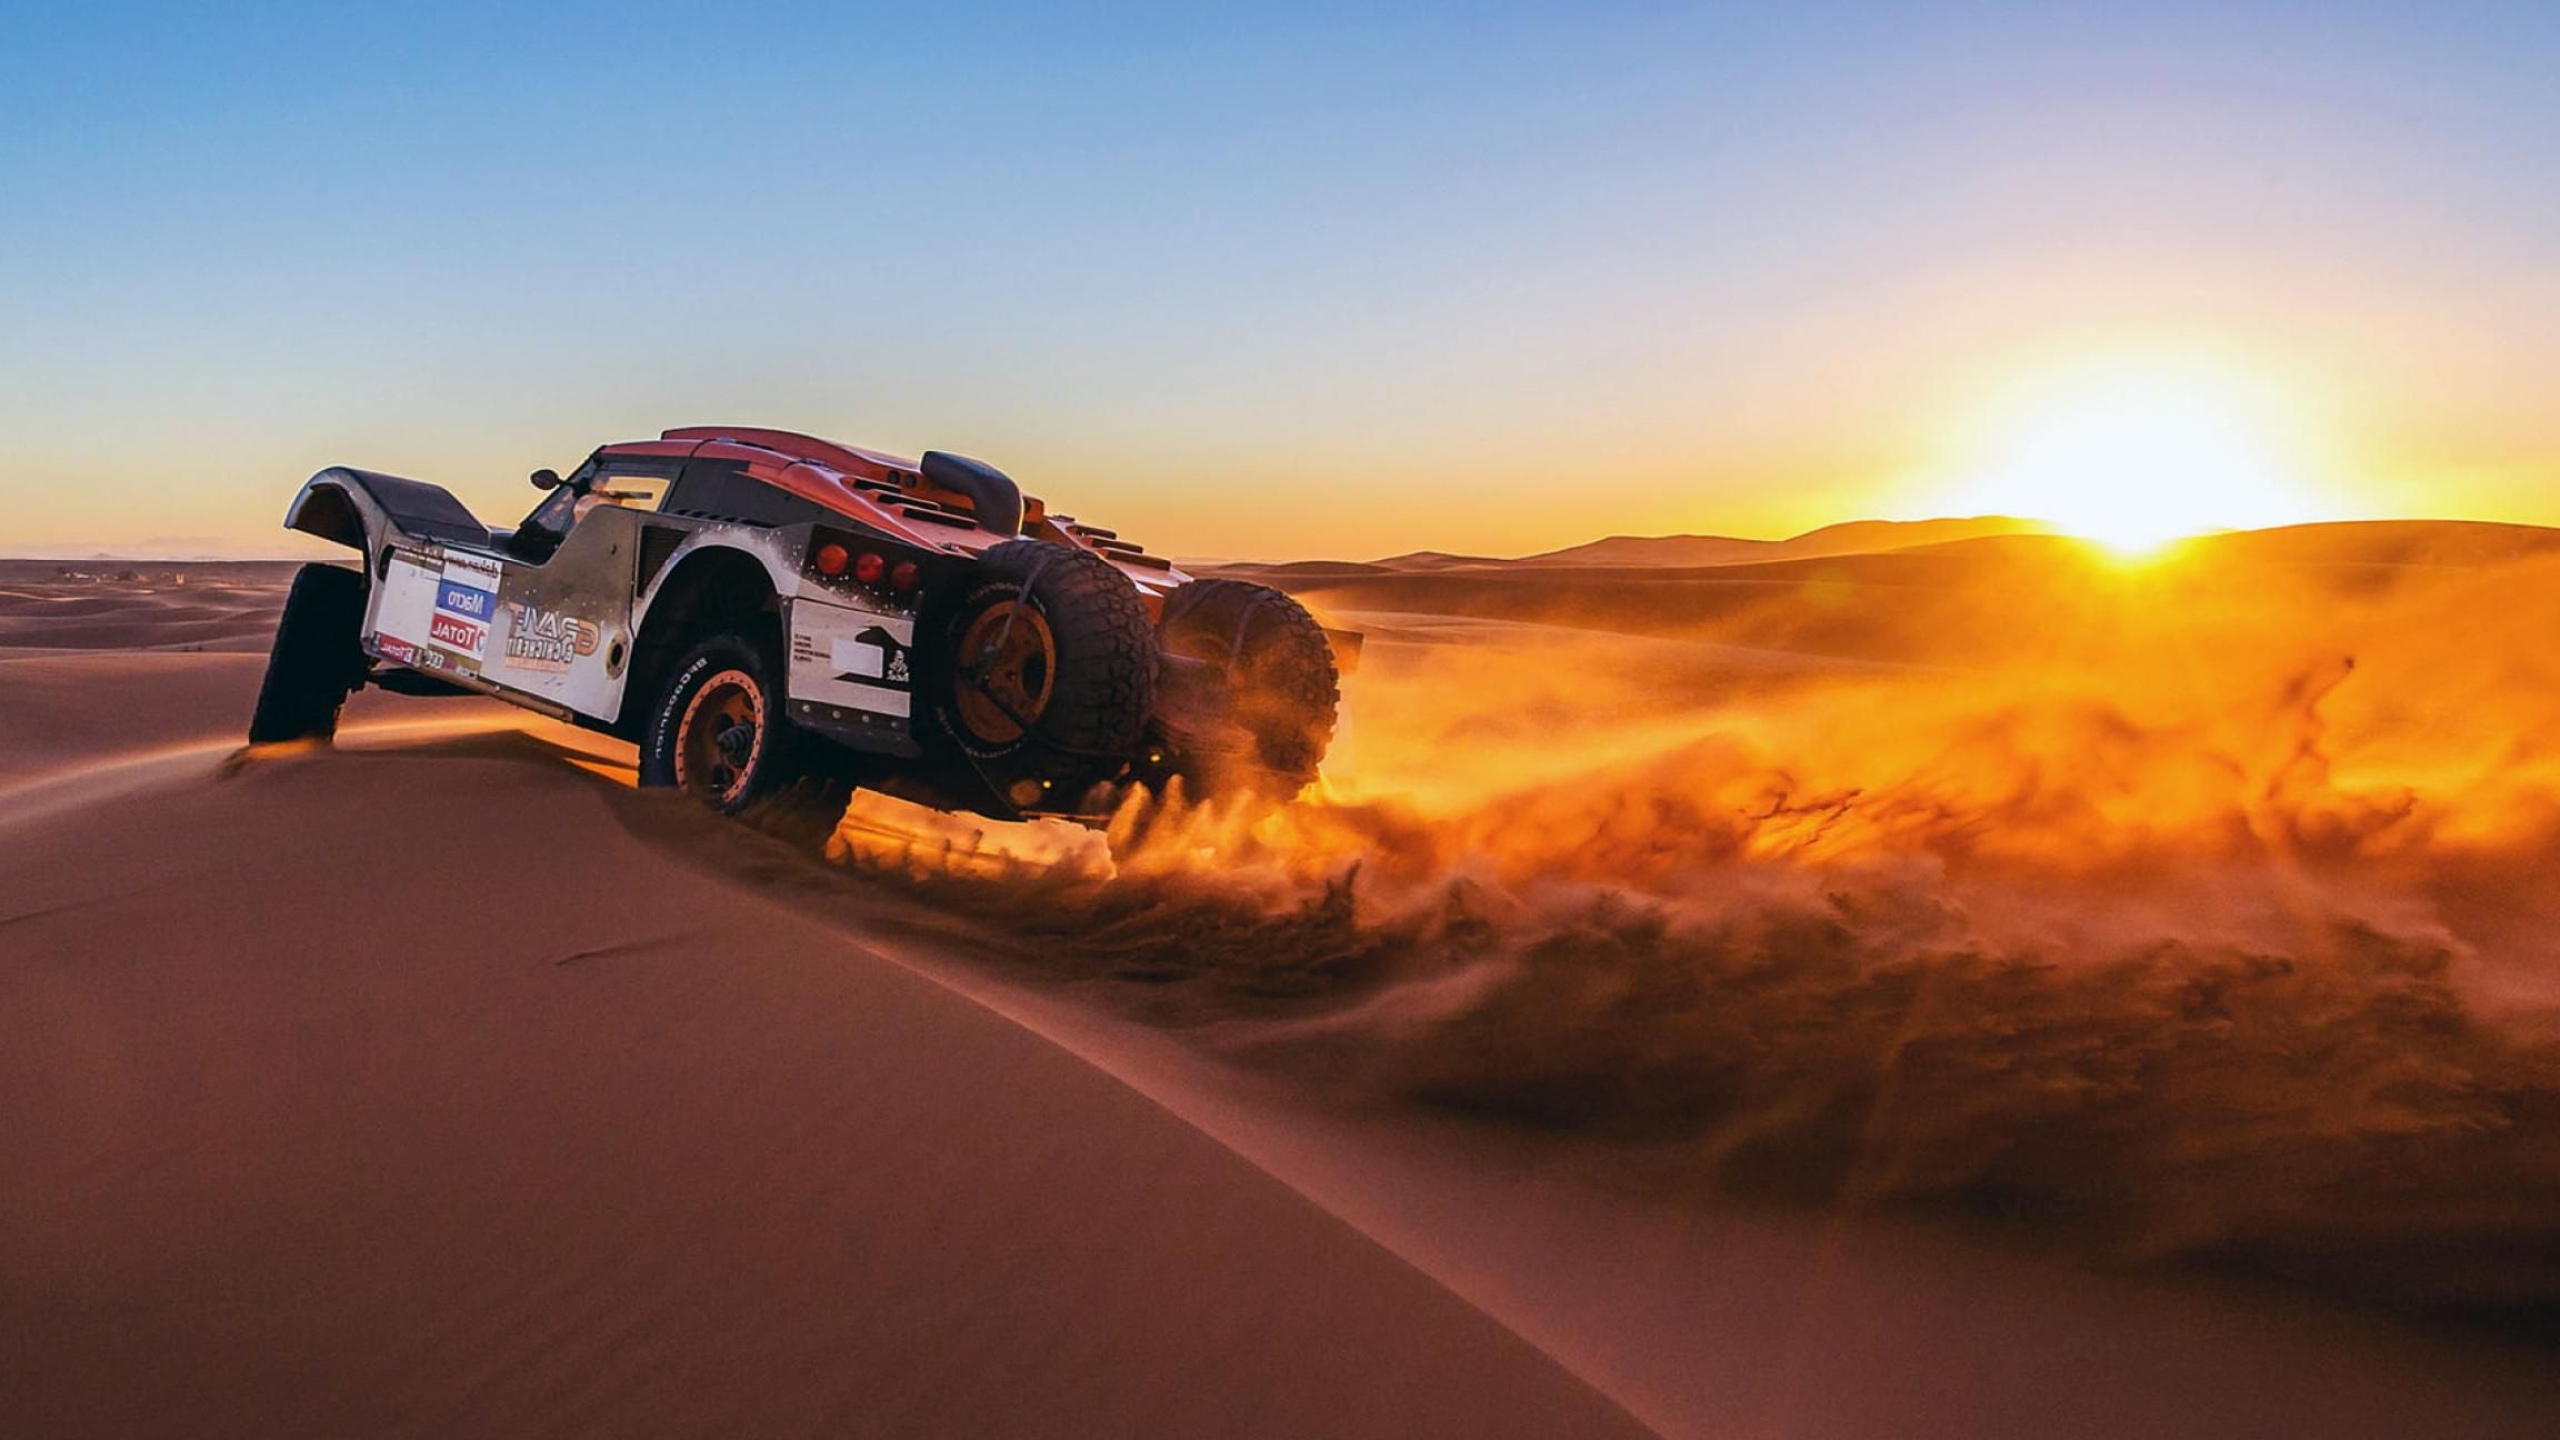 Dakar Rally: Dune buggies, Sand rails, Thousands of miles of harsh terrain. 2560x1440 HD Wallpaper.